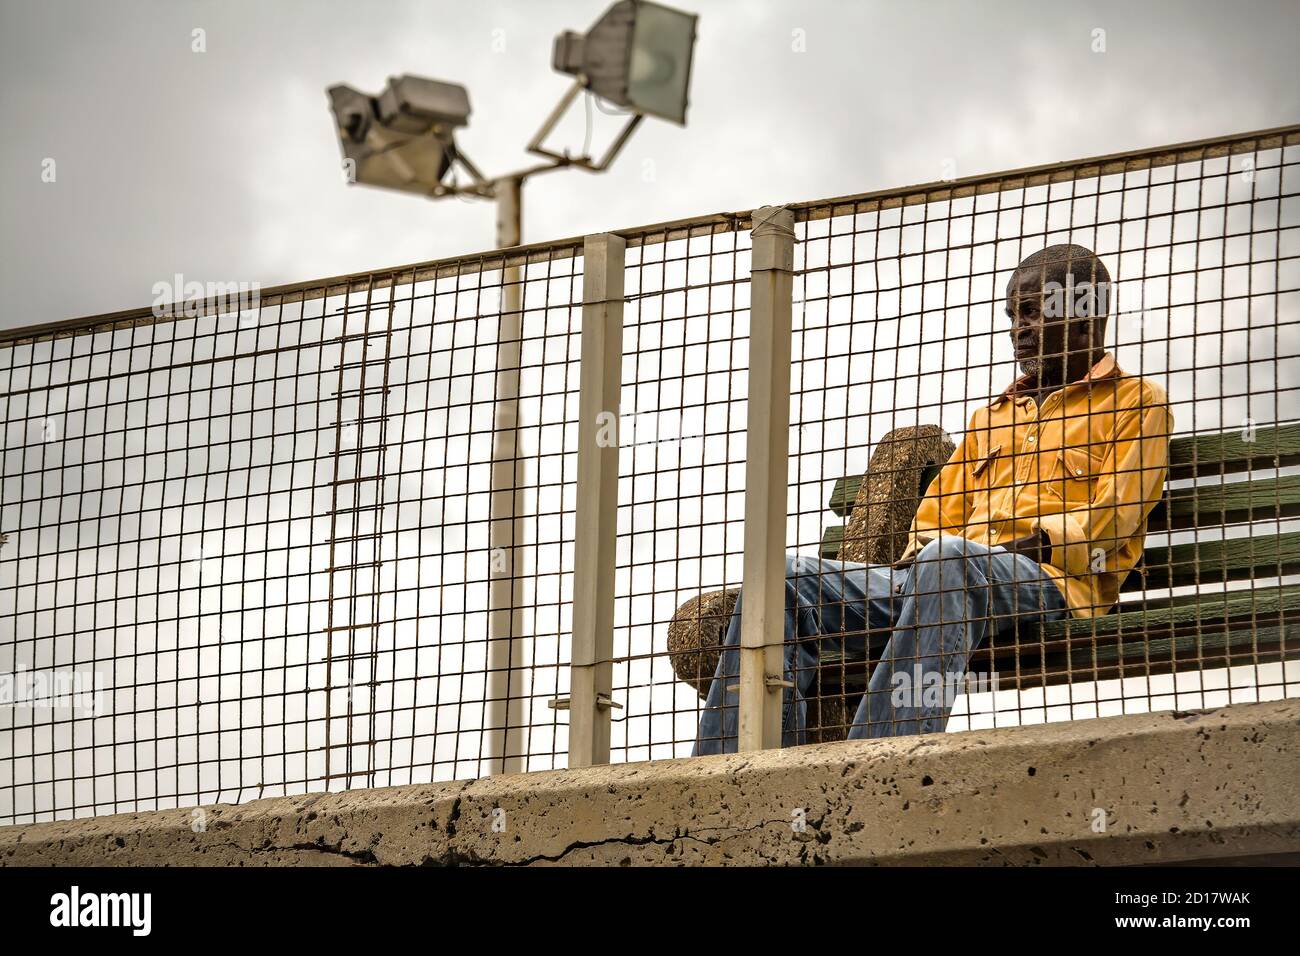 Muizenberg, Cape Town, Sudafrica - 31 DECEMBER 2017: portrait of a reflective black man waiting behind a barrier Stock Photo